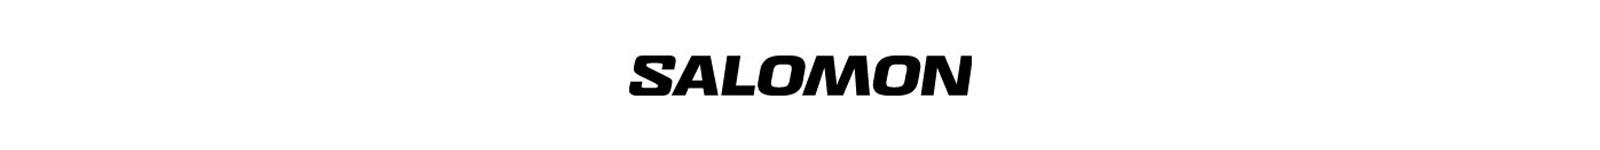 Salomon Snowboard Gear, Snowboards and Accessories